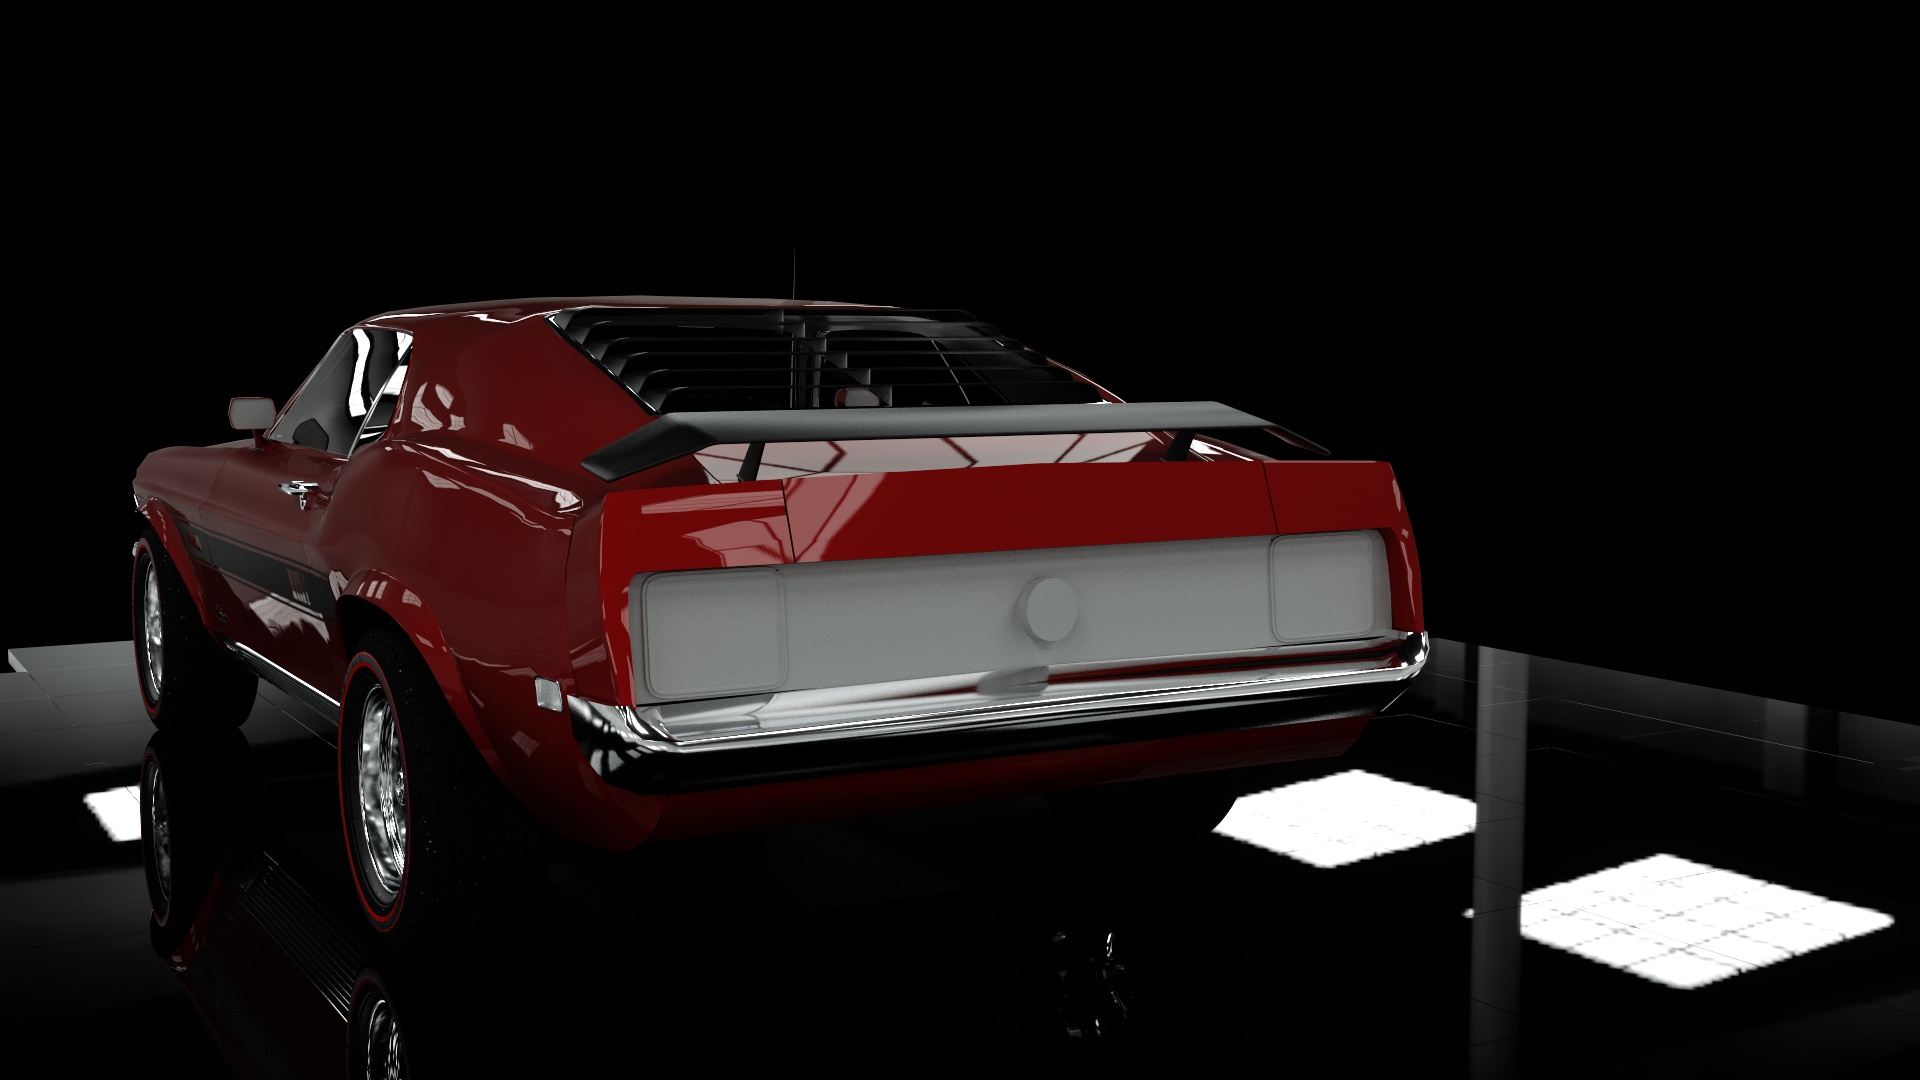 Car Render Challange 2019 - Mustang Mach 1